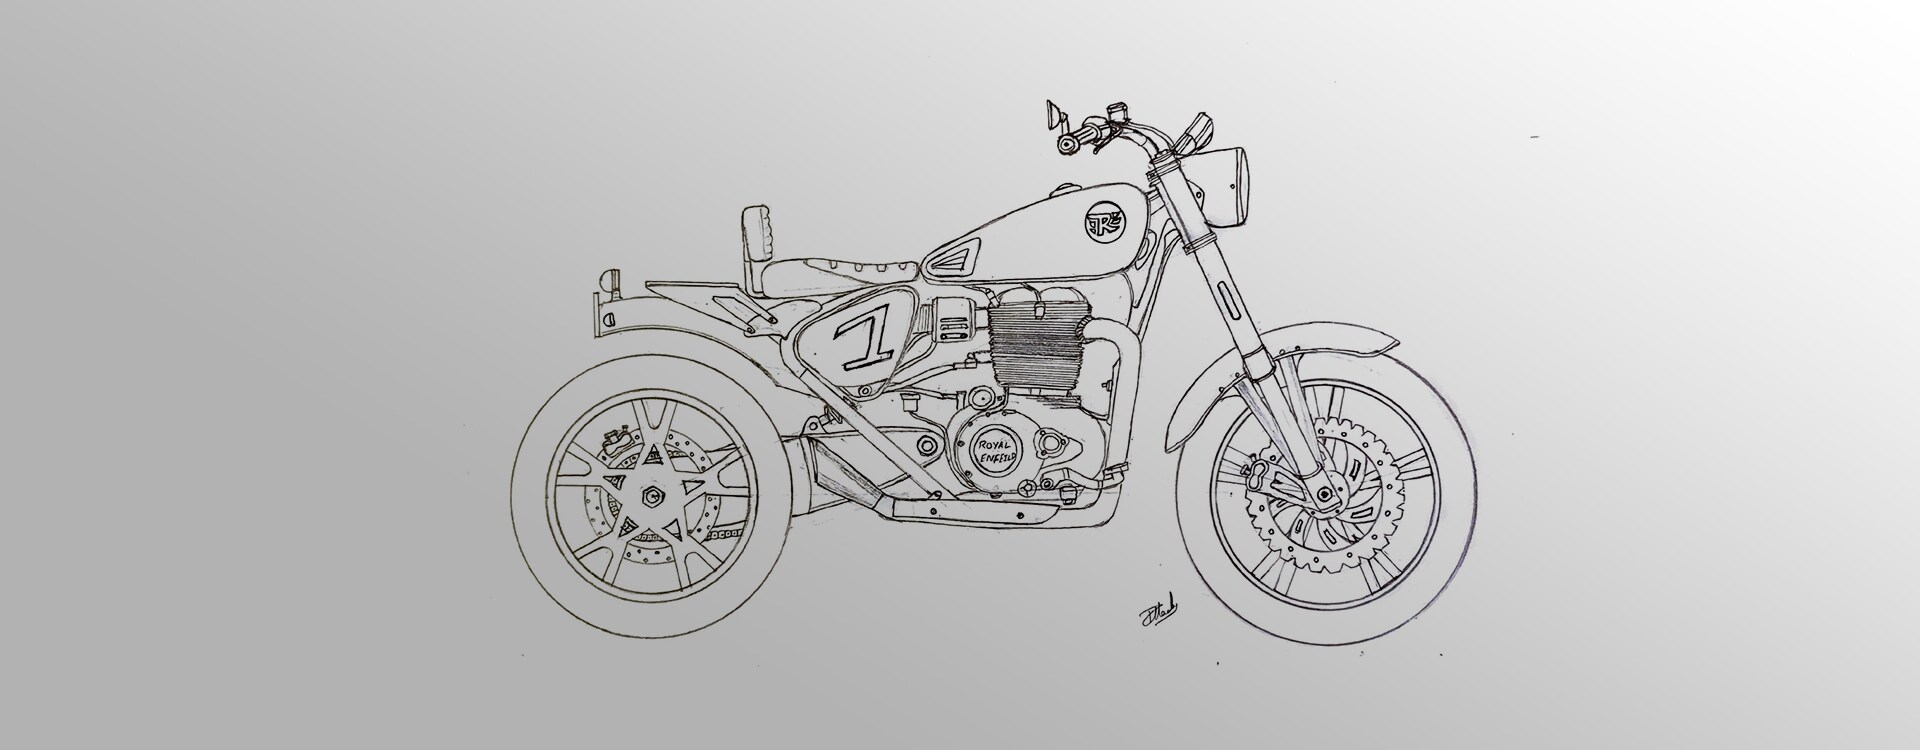 Miguel Belascuain on LinkedIn: #motorcycledesign #hondamotorcycles  #royalenfield #himalayan…